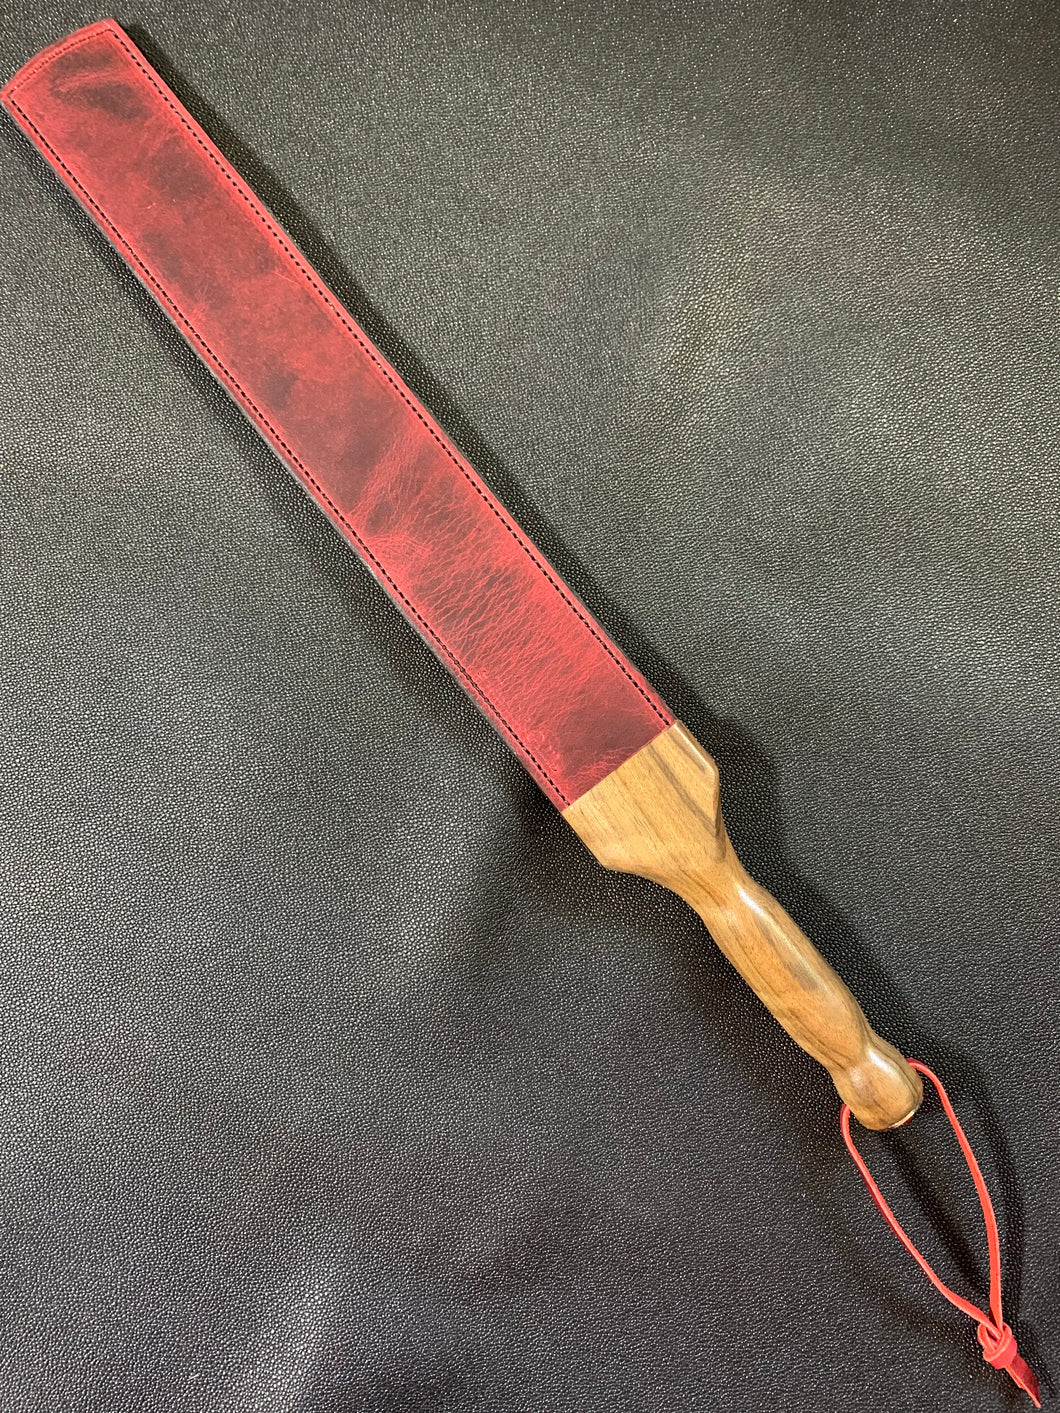 Strap: Red Latigo Leather with Walnut Handle